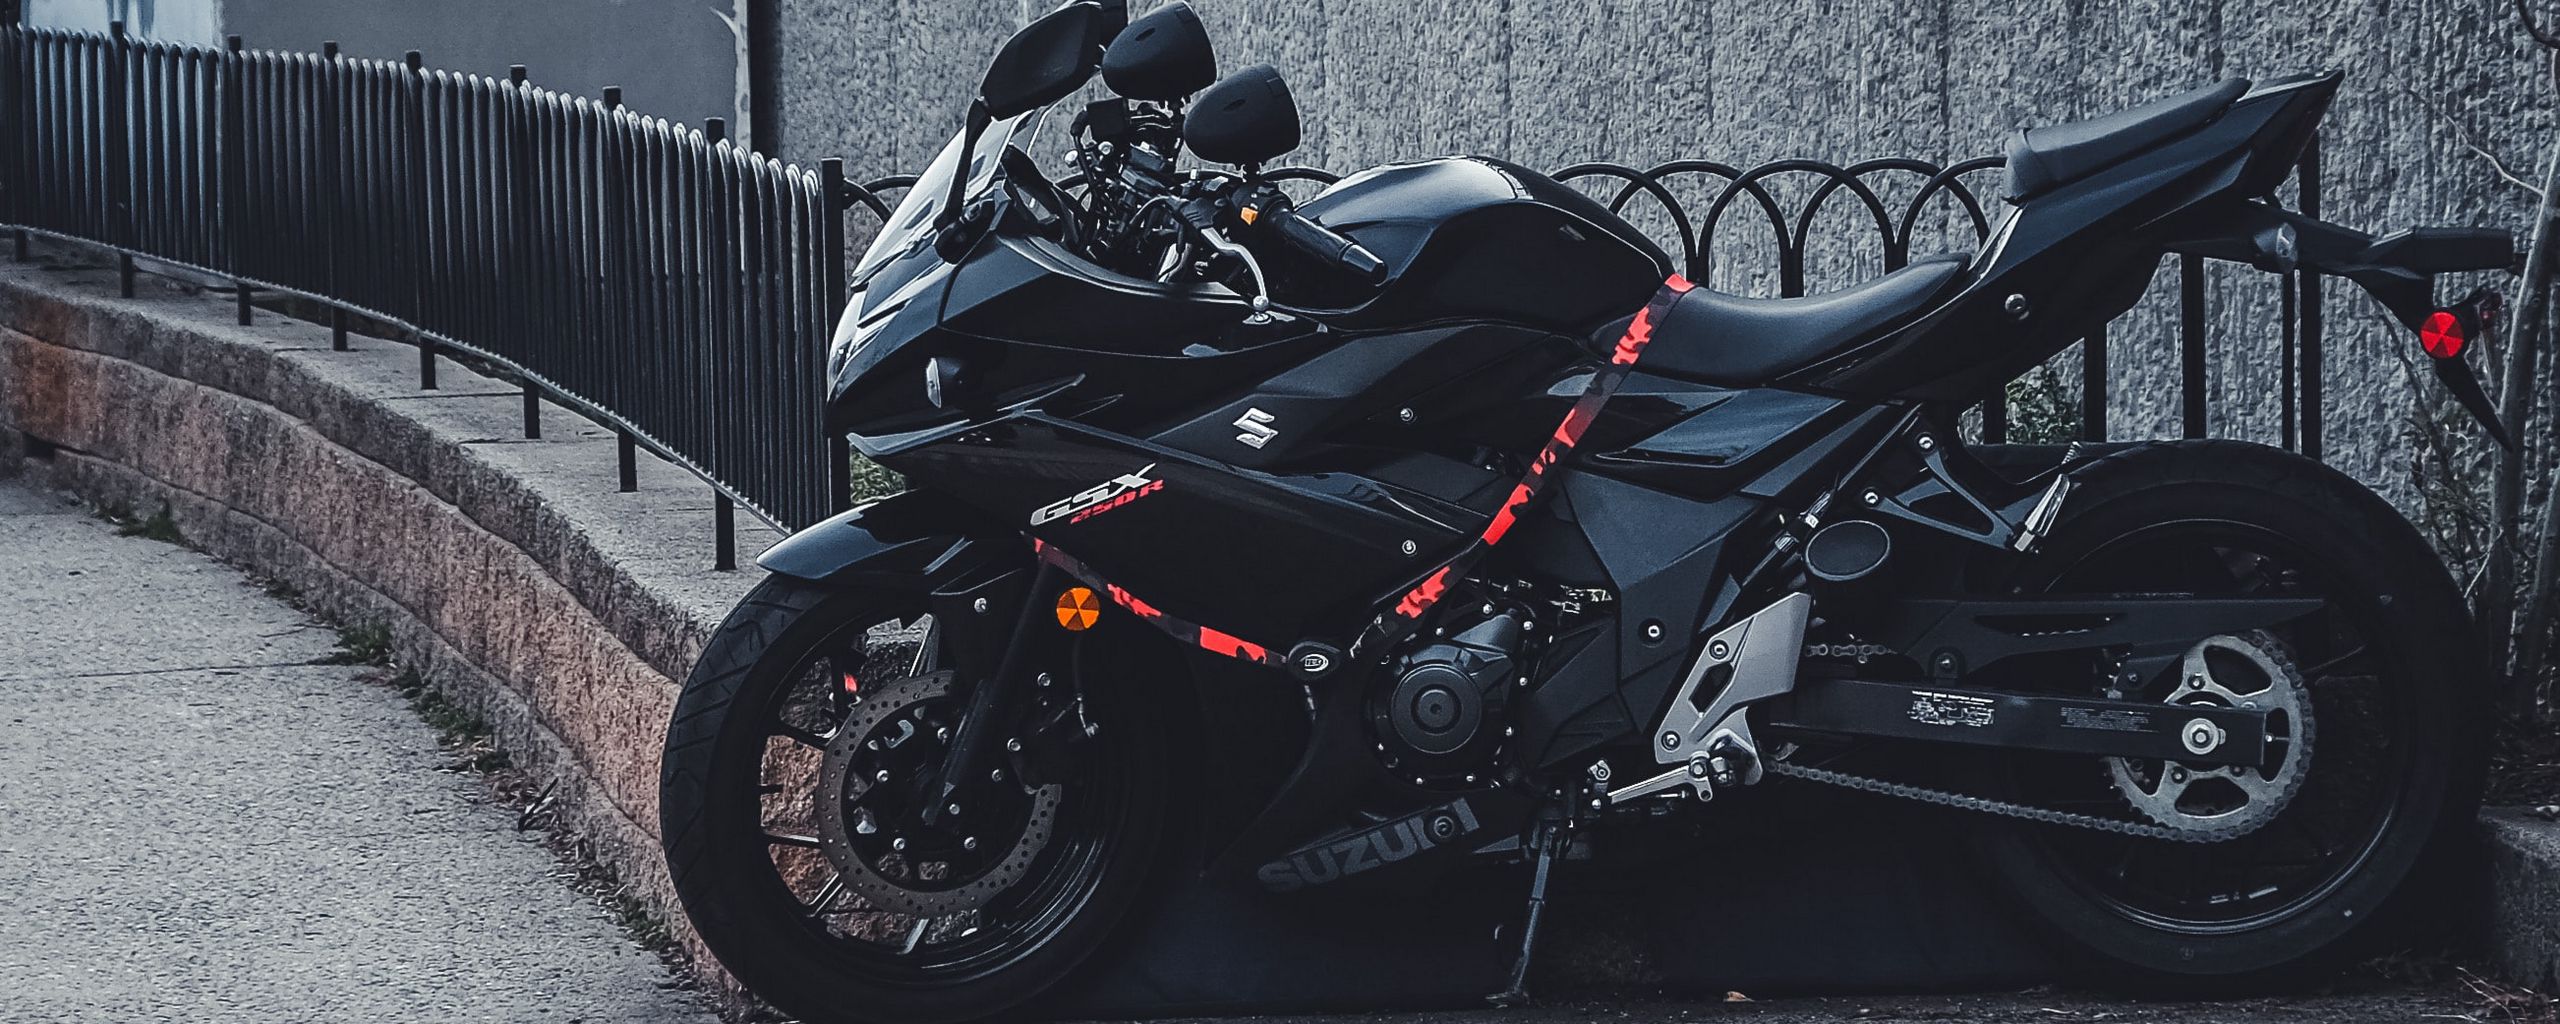 2560x1024 Wallpaper suzuki, motorcycle, bike, black, parking